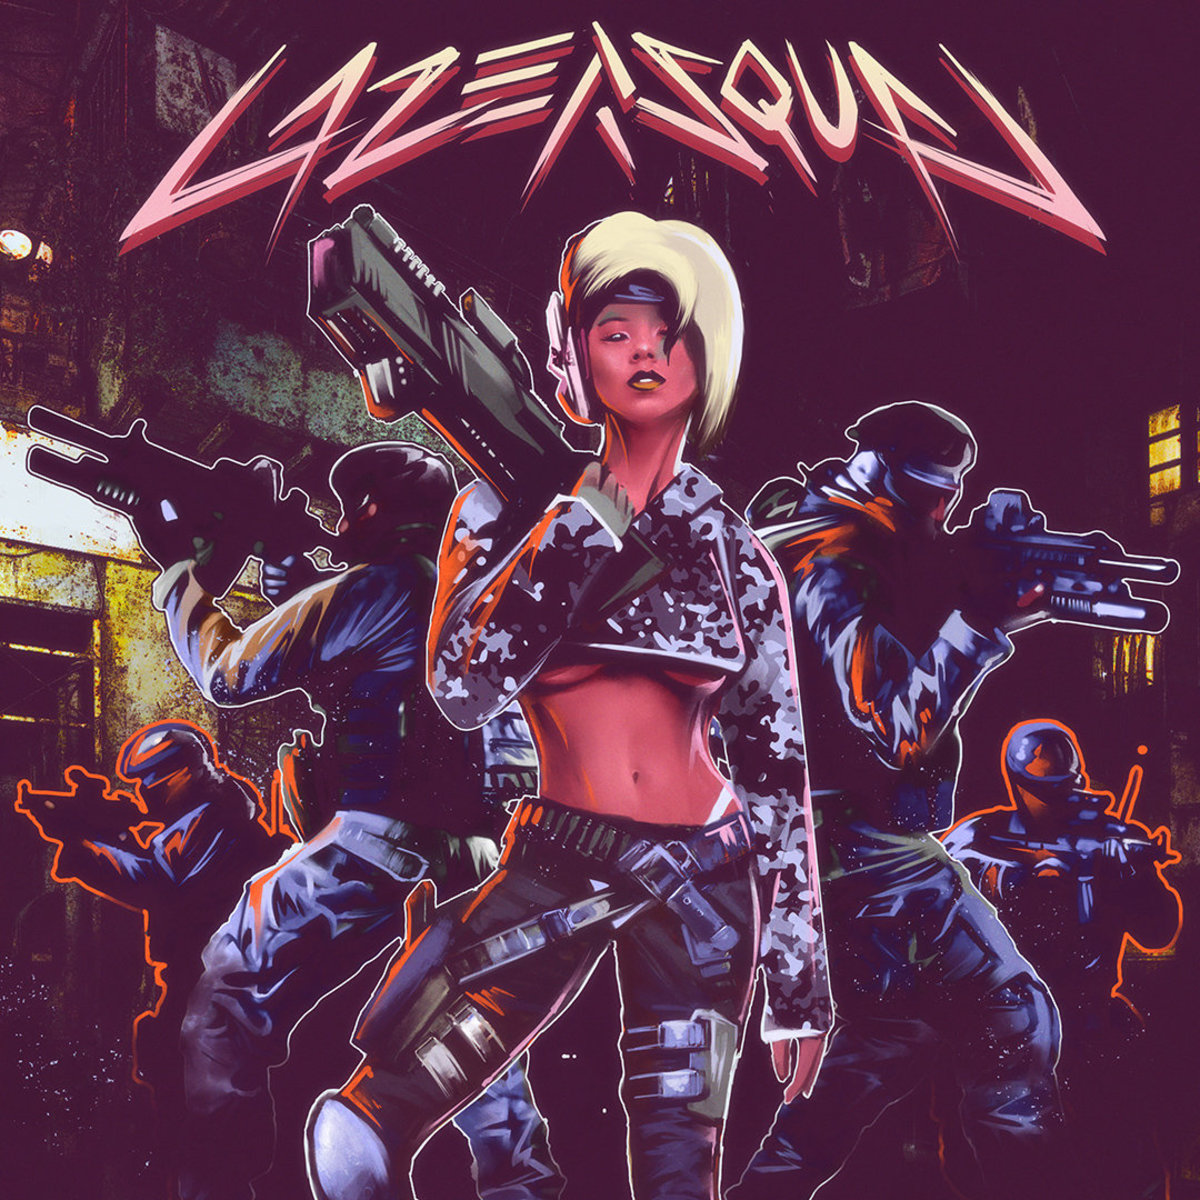 Lazer Squad's "Neon Vibes" EP cover art.